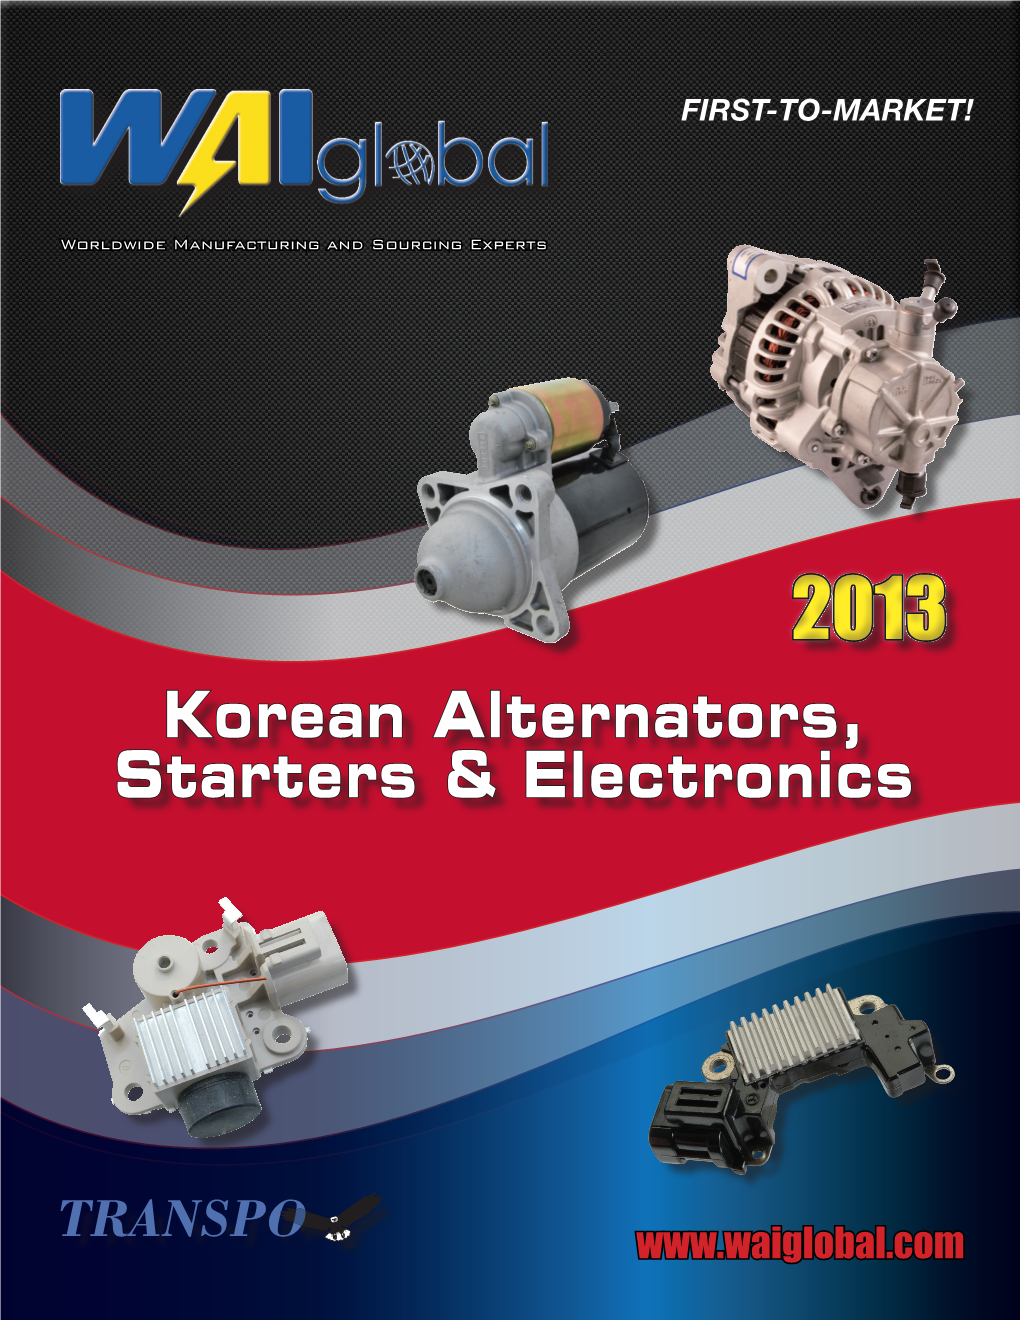 Korean Alternators, Starters & Electronics